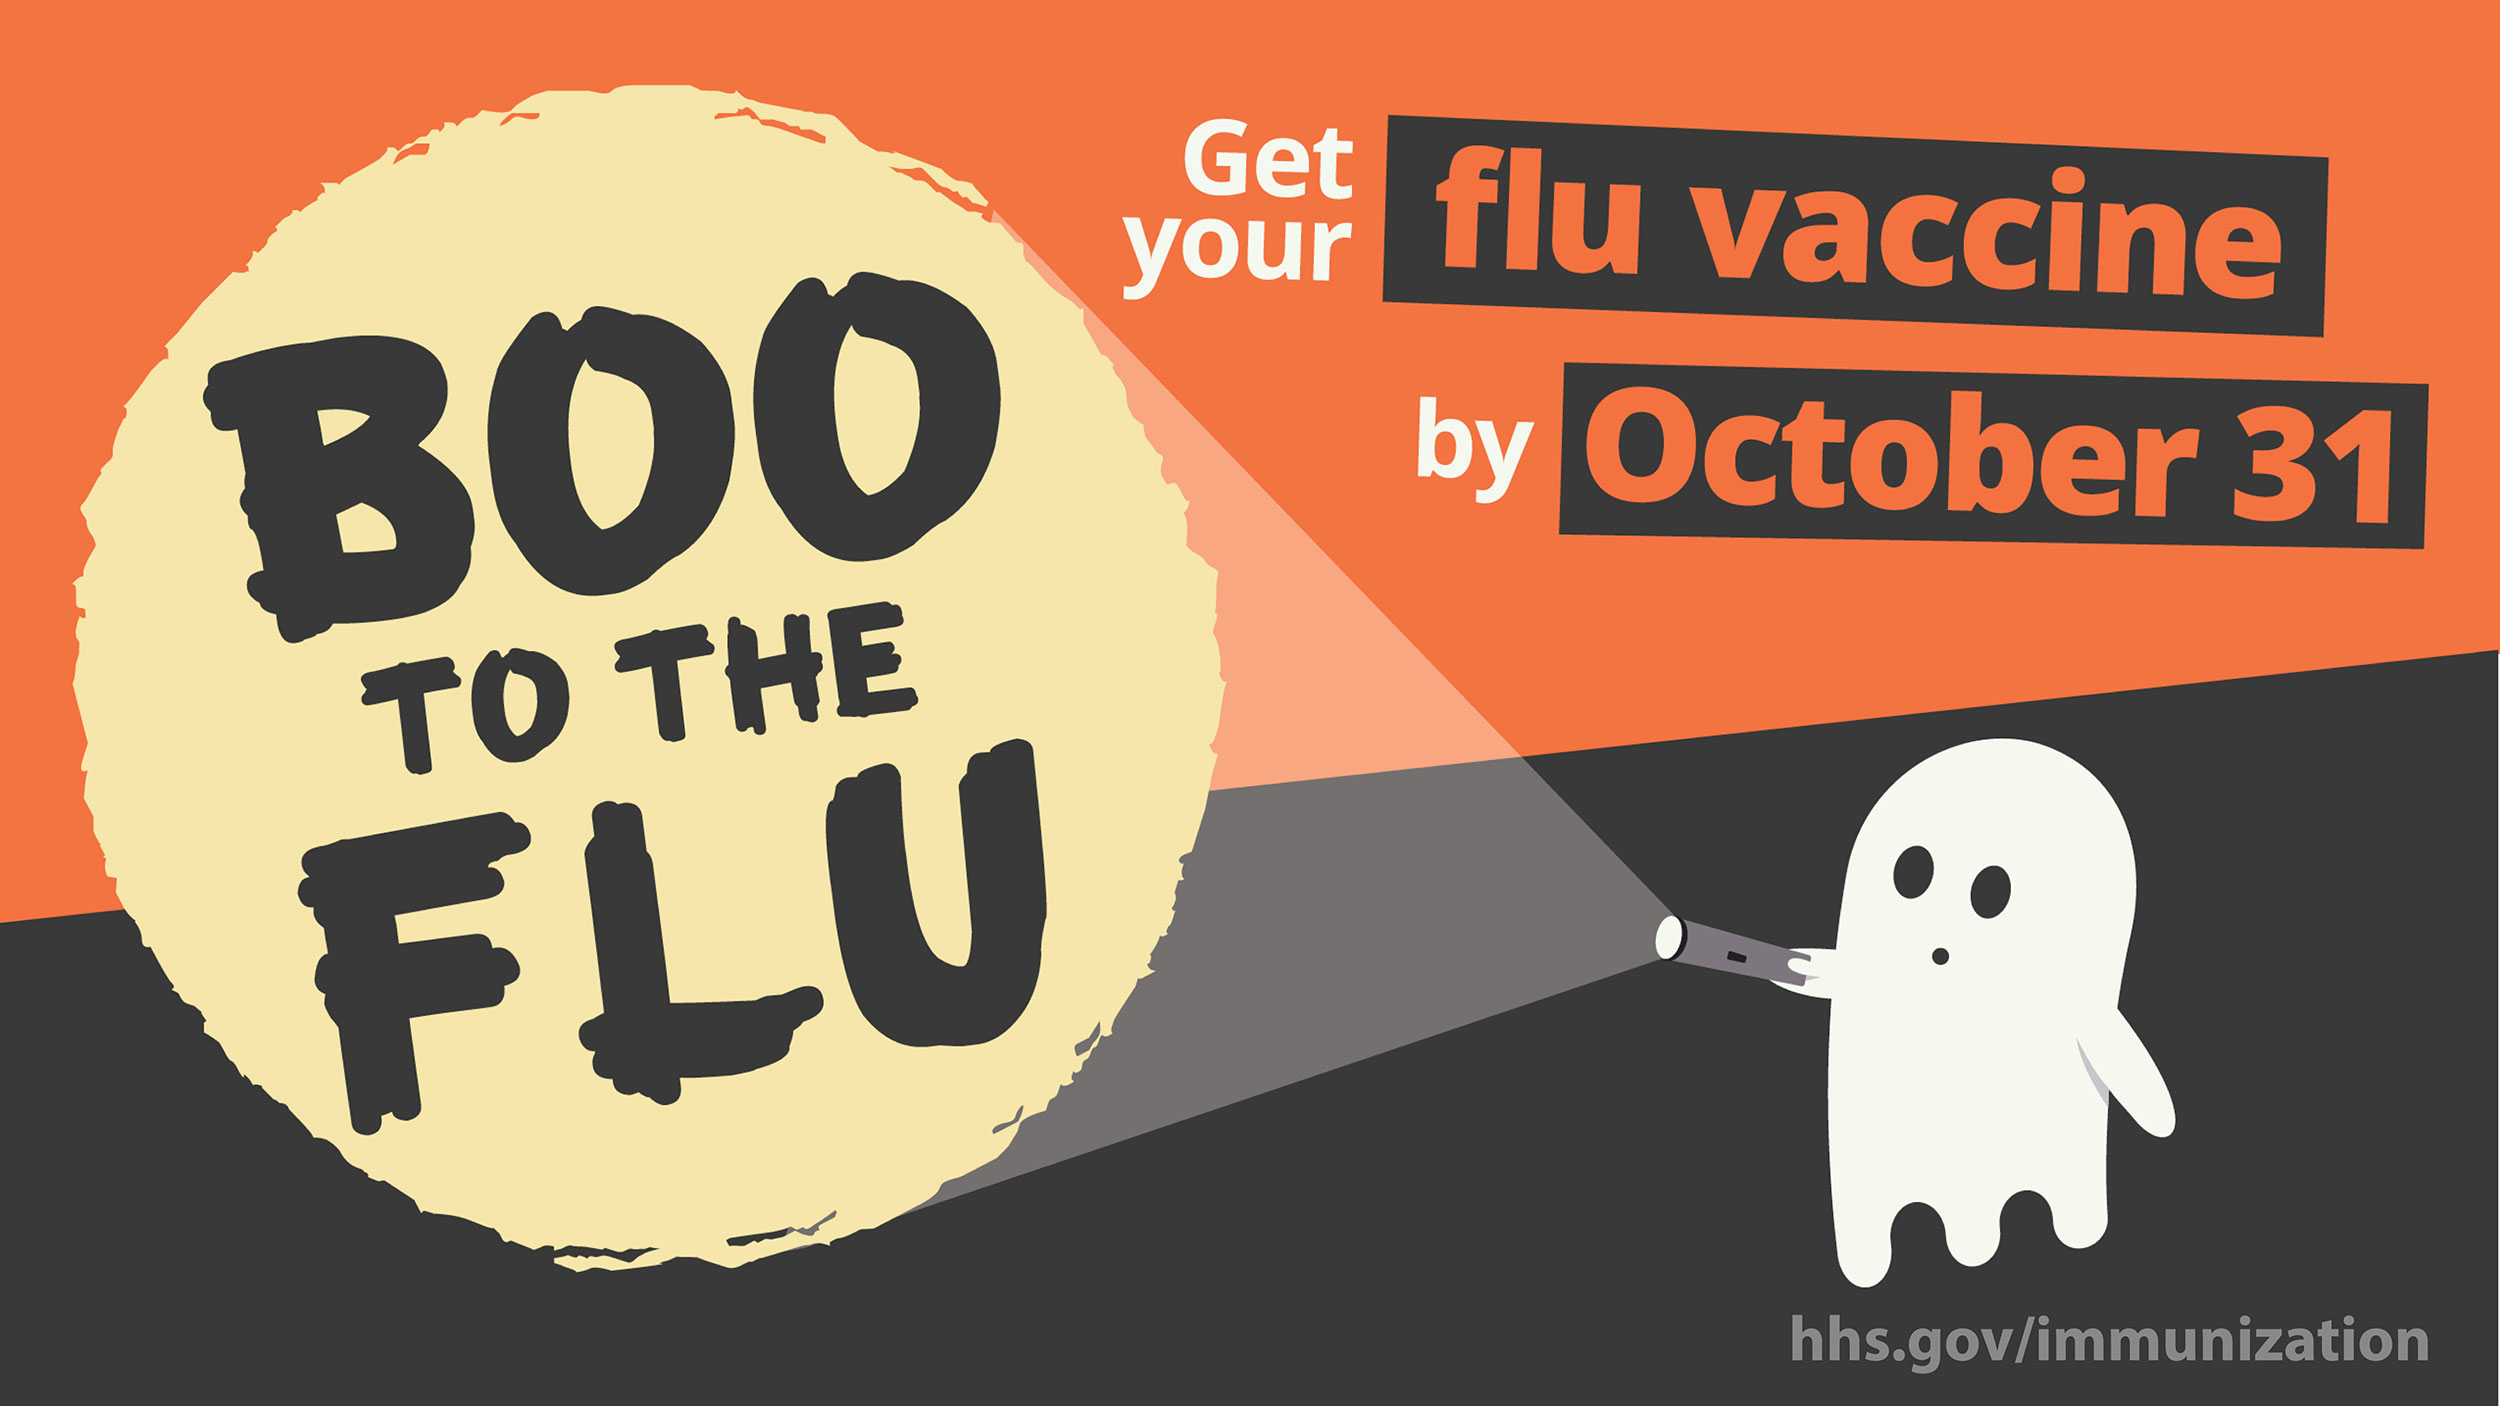 Boo the FLU. Get your flu vaccine by October 31. Visit hhs.gov/immunization